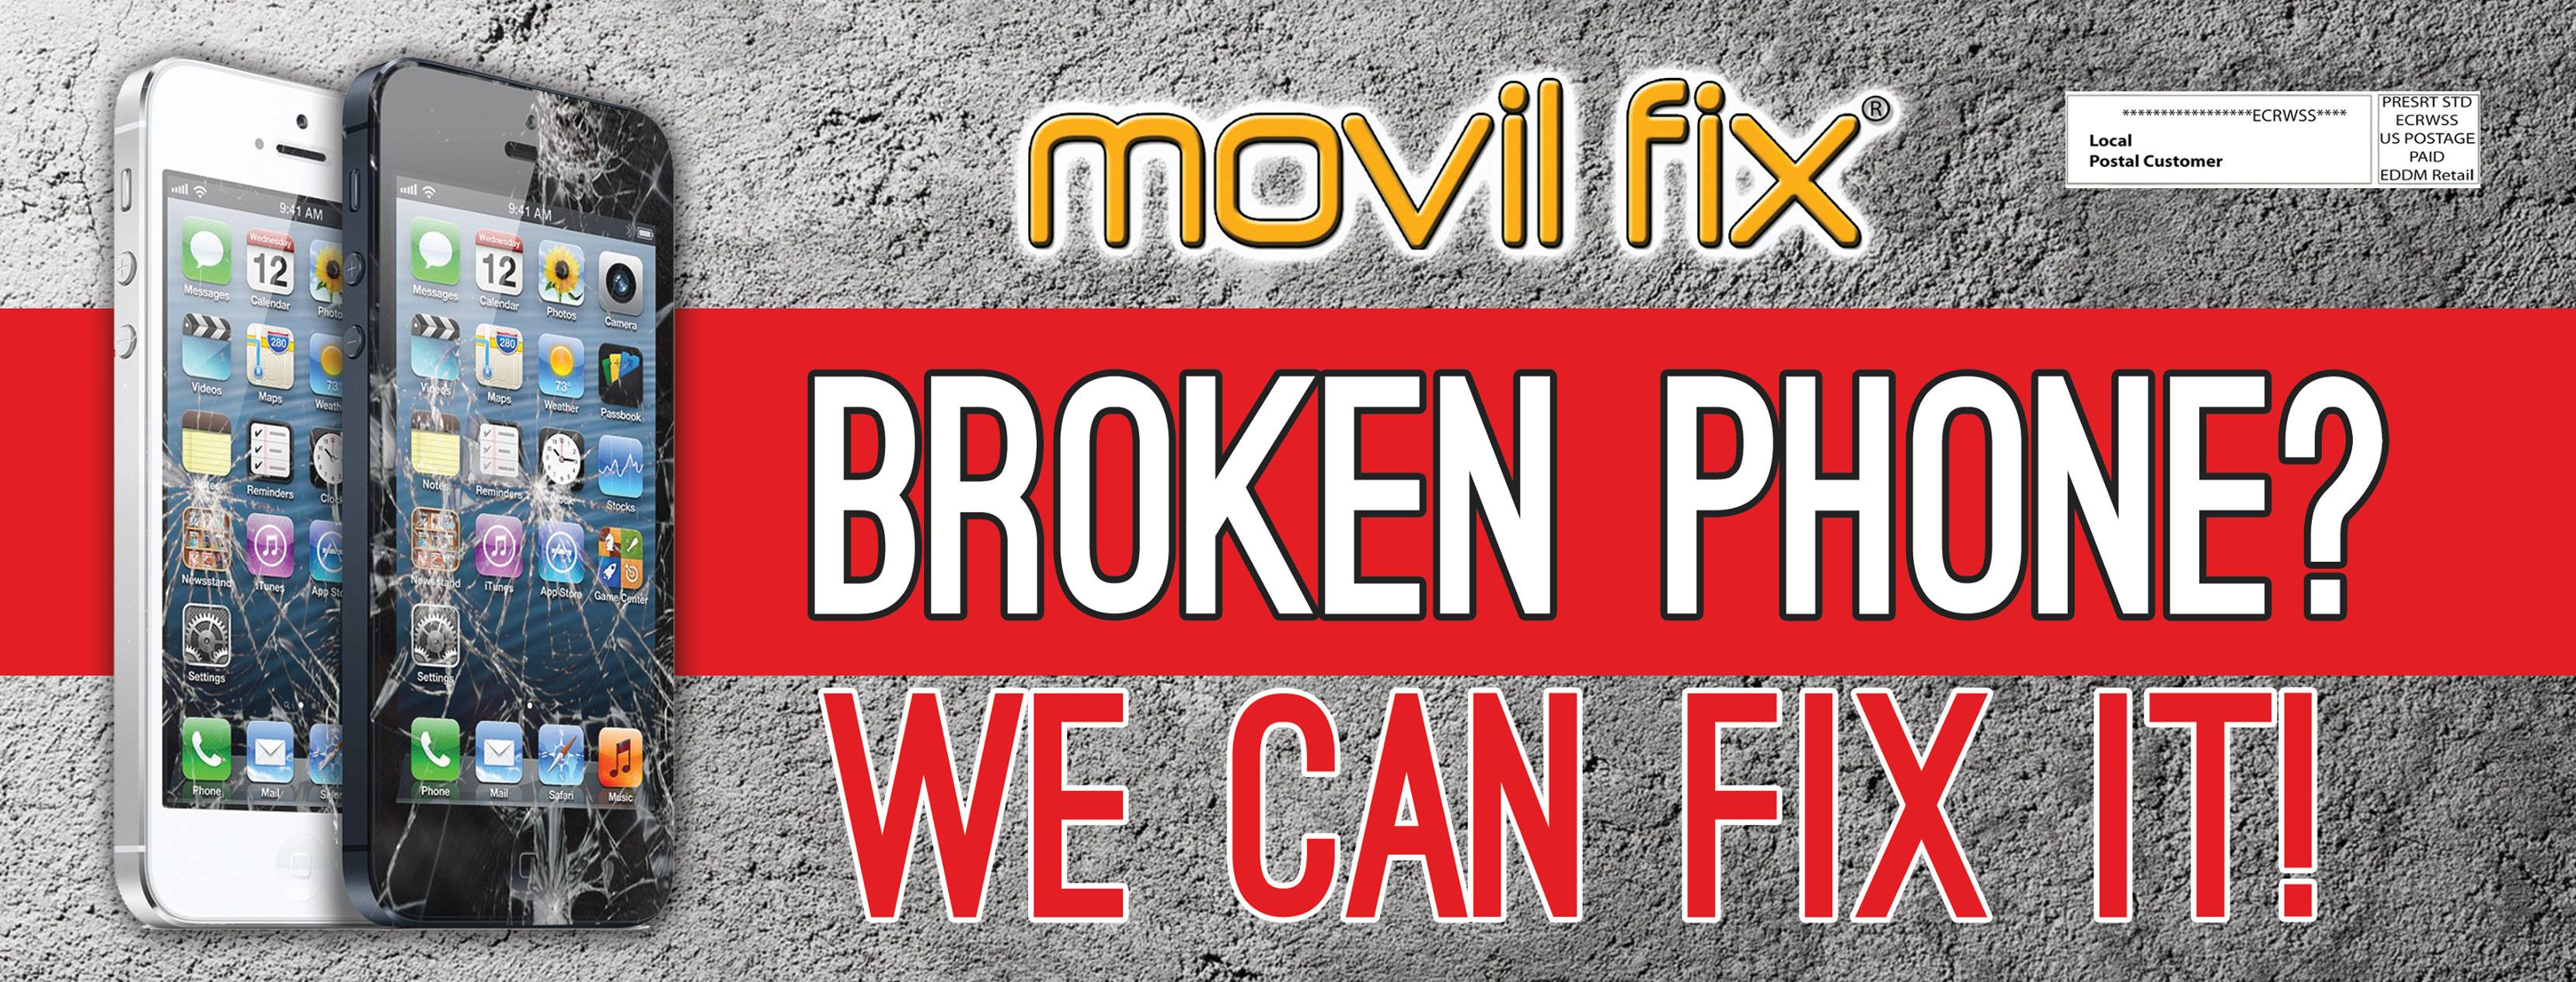 MovilFix CellPhone Parts Wholesale and Distribution